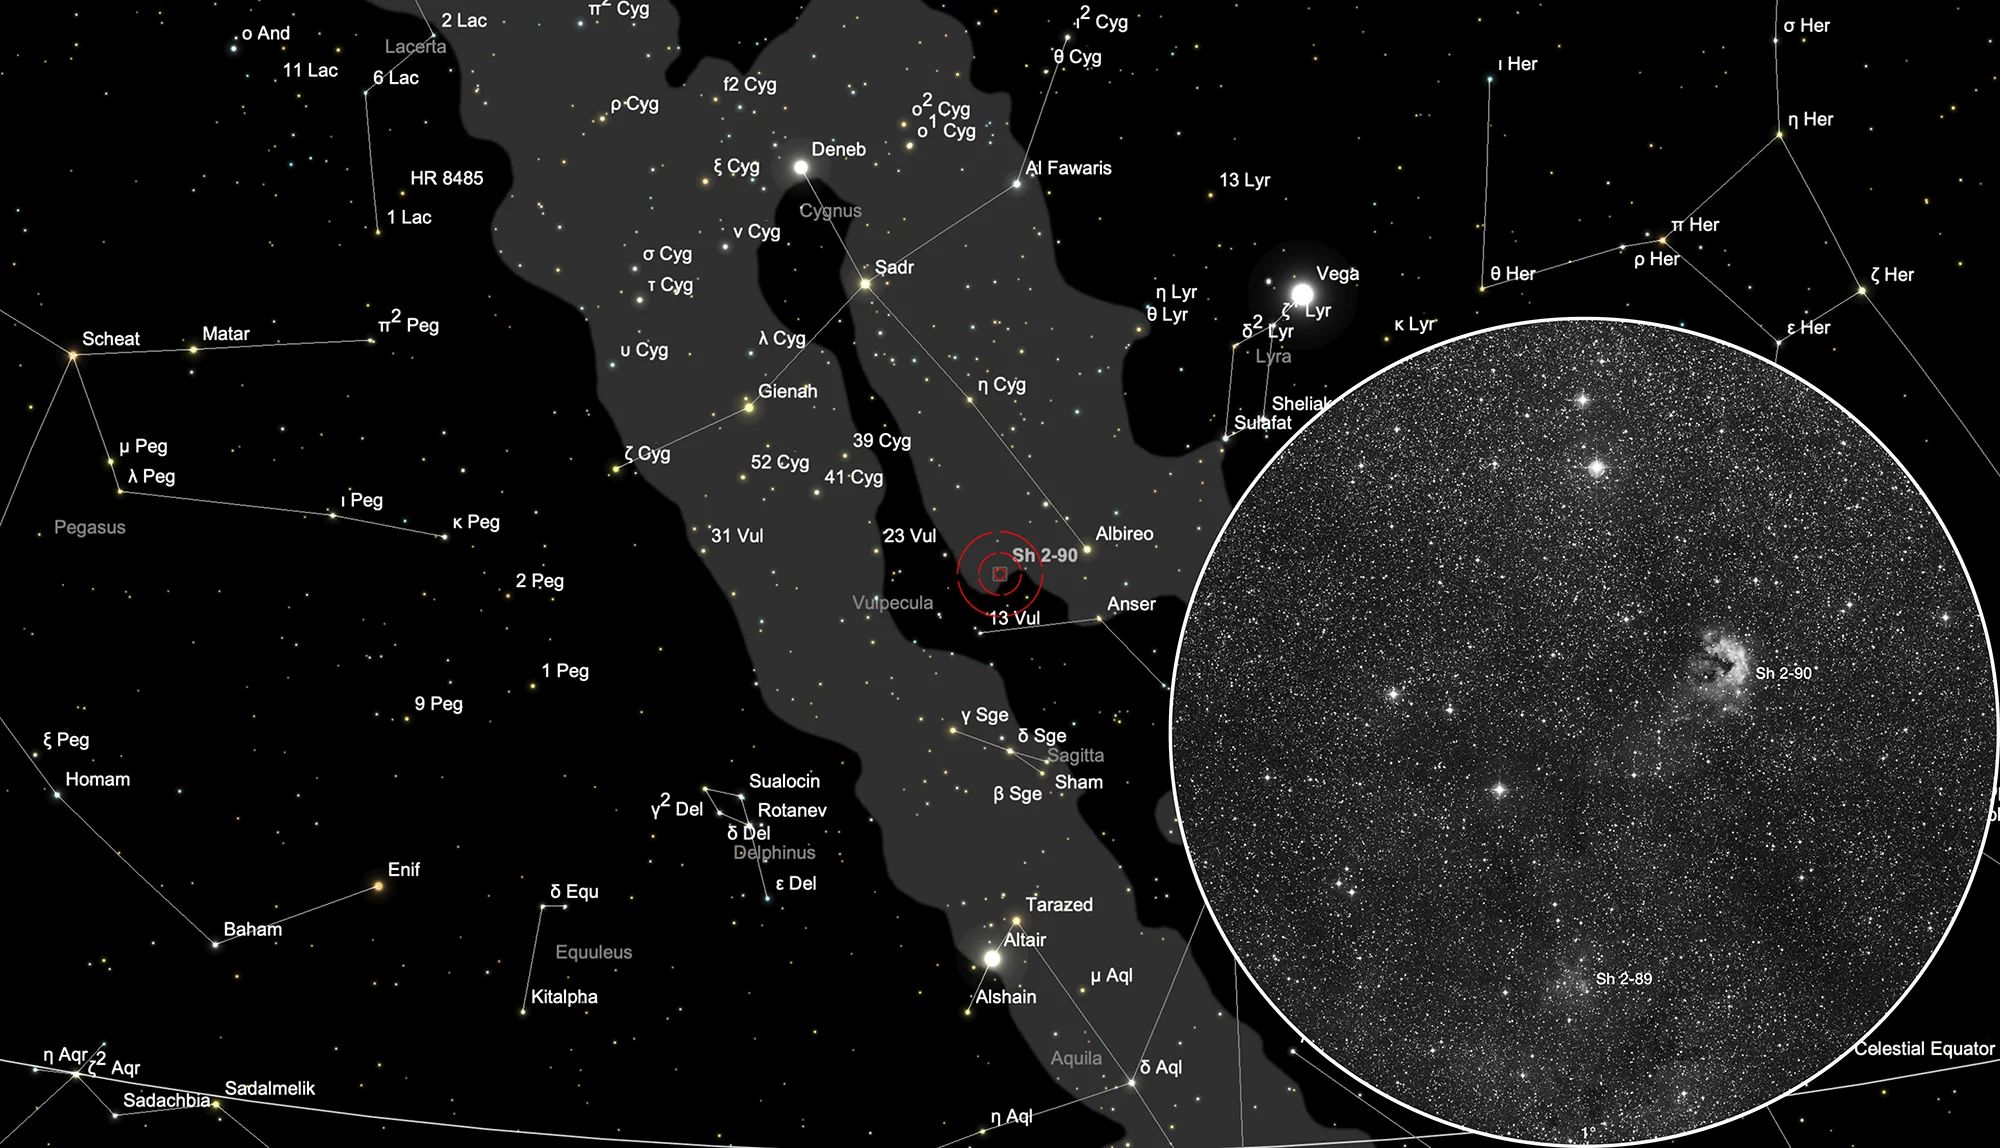 Finder Chart Galactic Nebulae Sh 2-89 and Sh 2-90